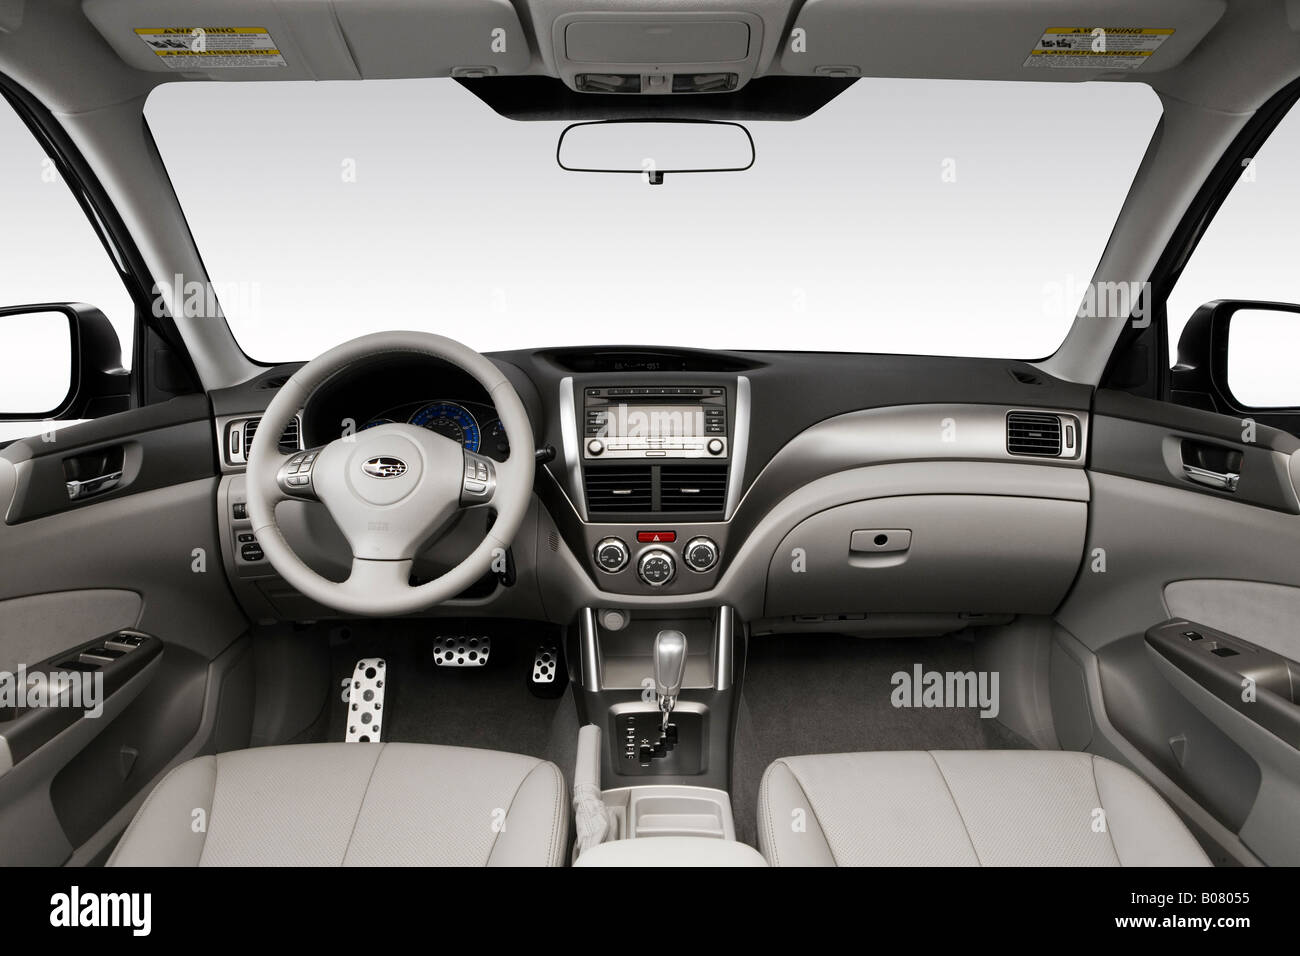 2009 Subaru Forester Xt In Gray Dashboard Center Console